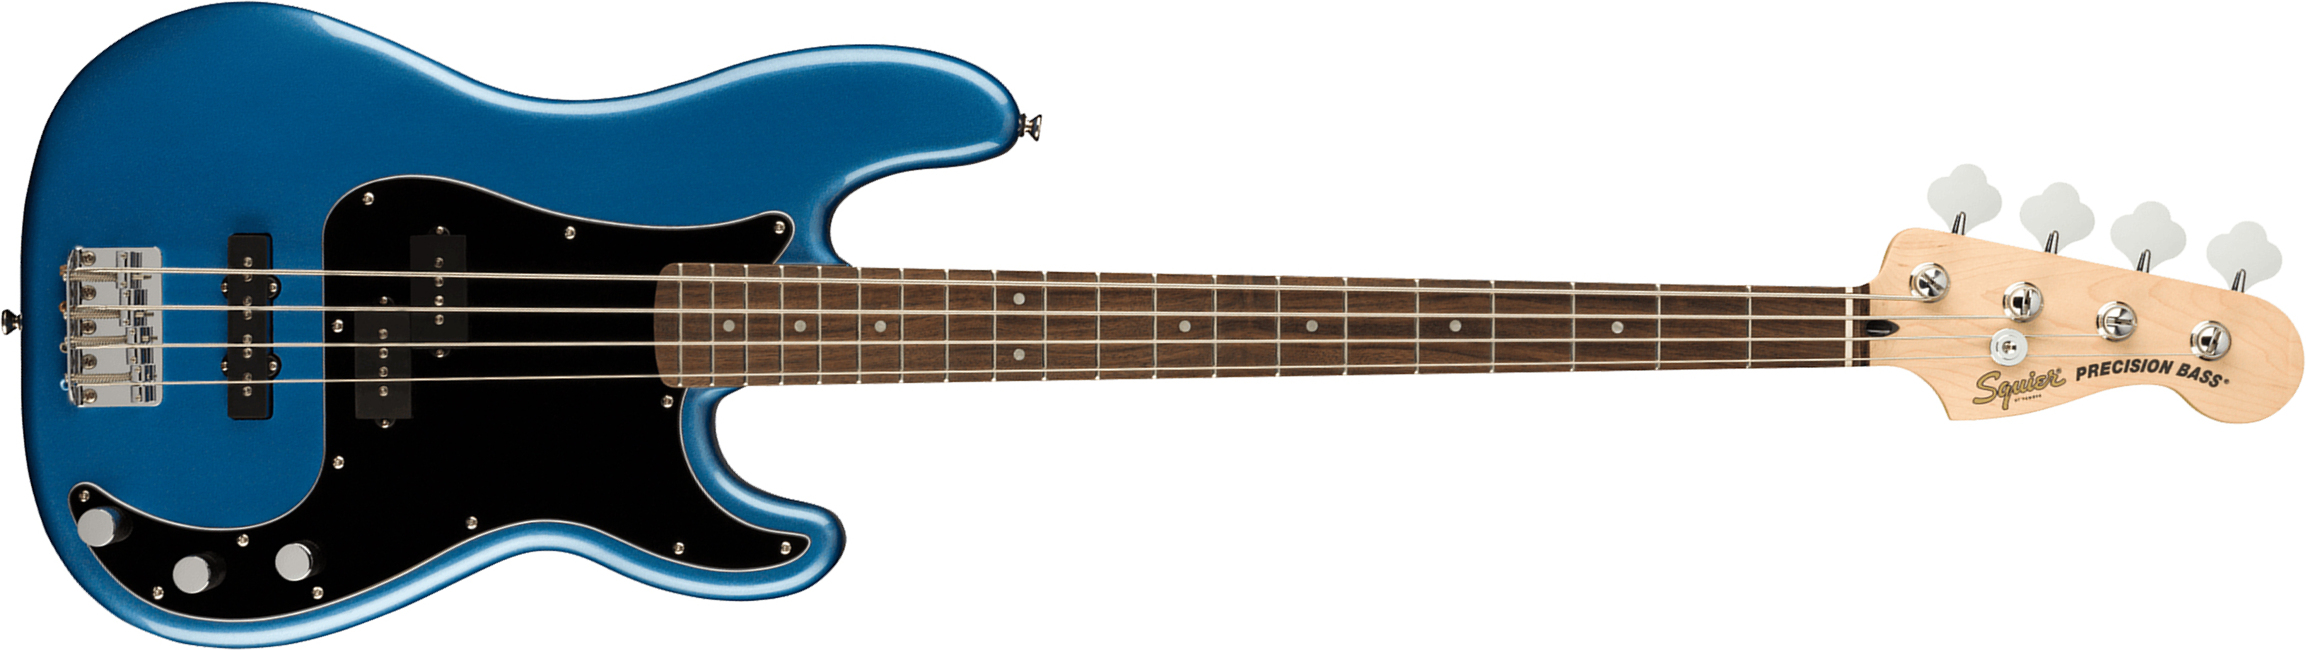 Squier Precision Bass Affinity Pj 2021 Lau - Lake Placid Blue - Bajo eléctrico de cuerpo sólido - Main picture